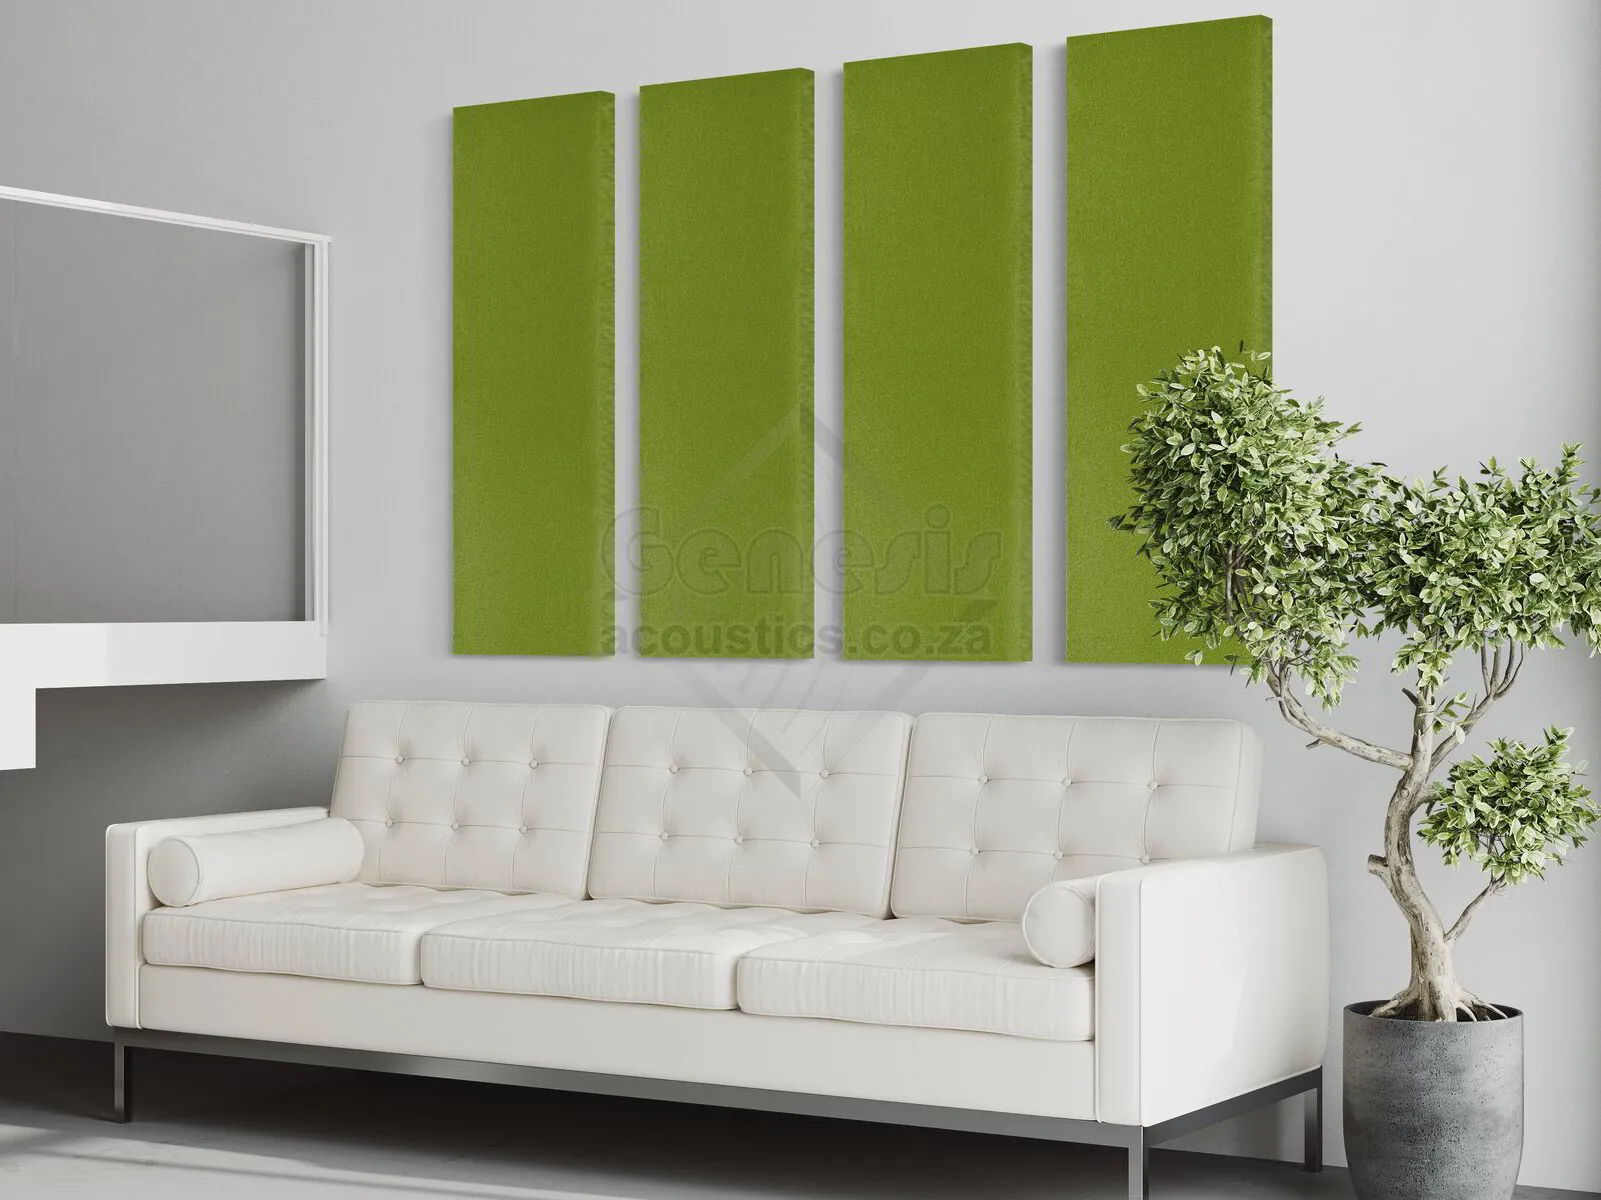 S5 Pro Acoustic Wall Panels - 120cm x 40cm Set of 4 - Wasabi